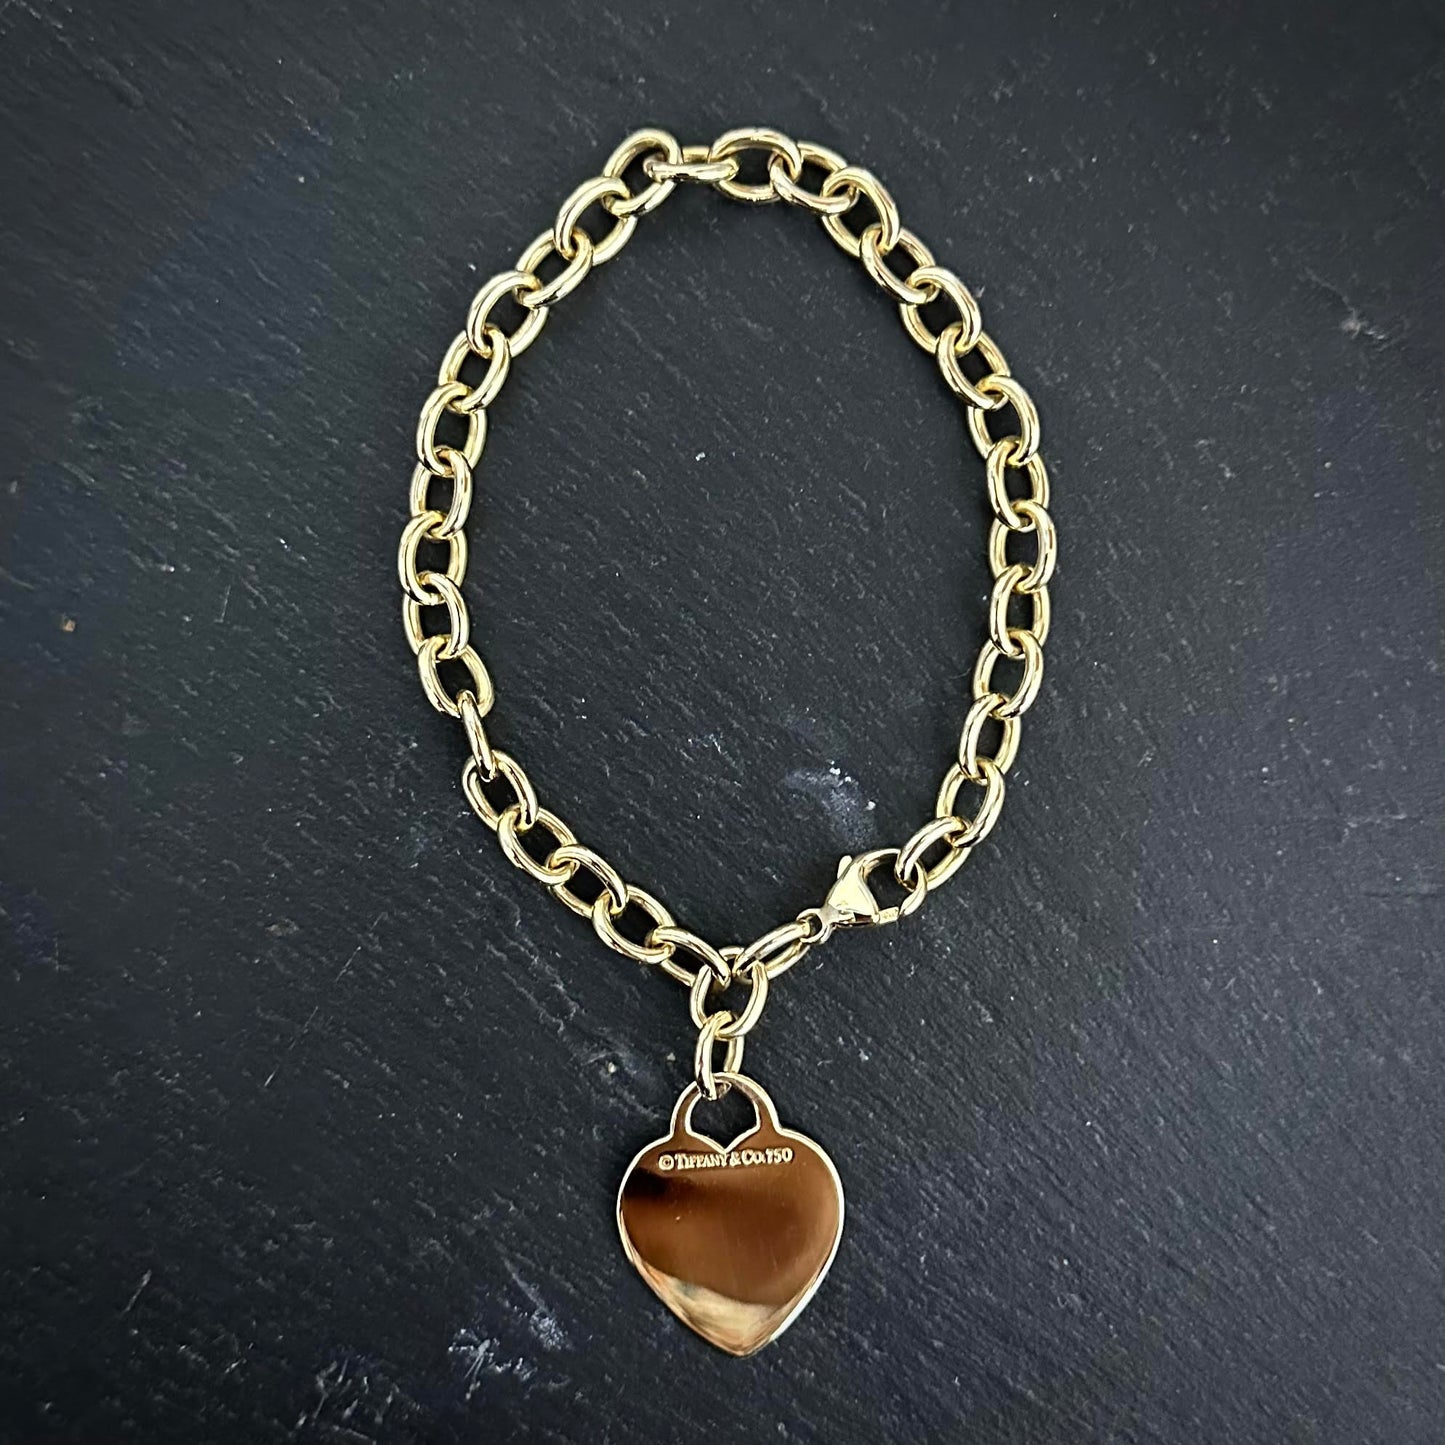 Pre-Owned: Precious yellow metal  'Tiffany & Co' heart charm bracelet.